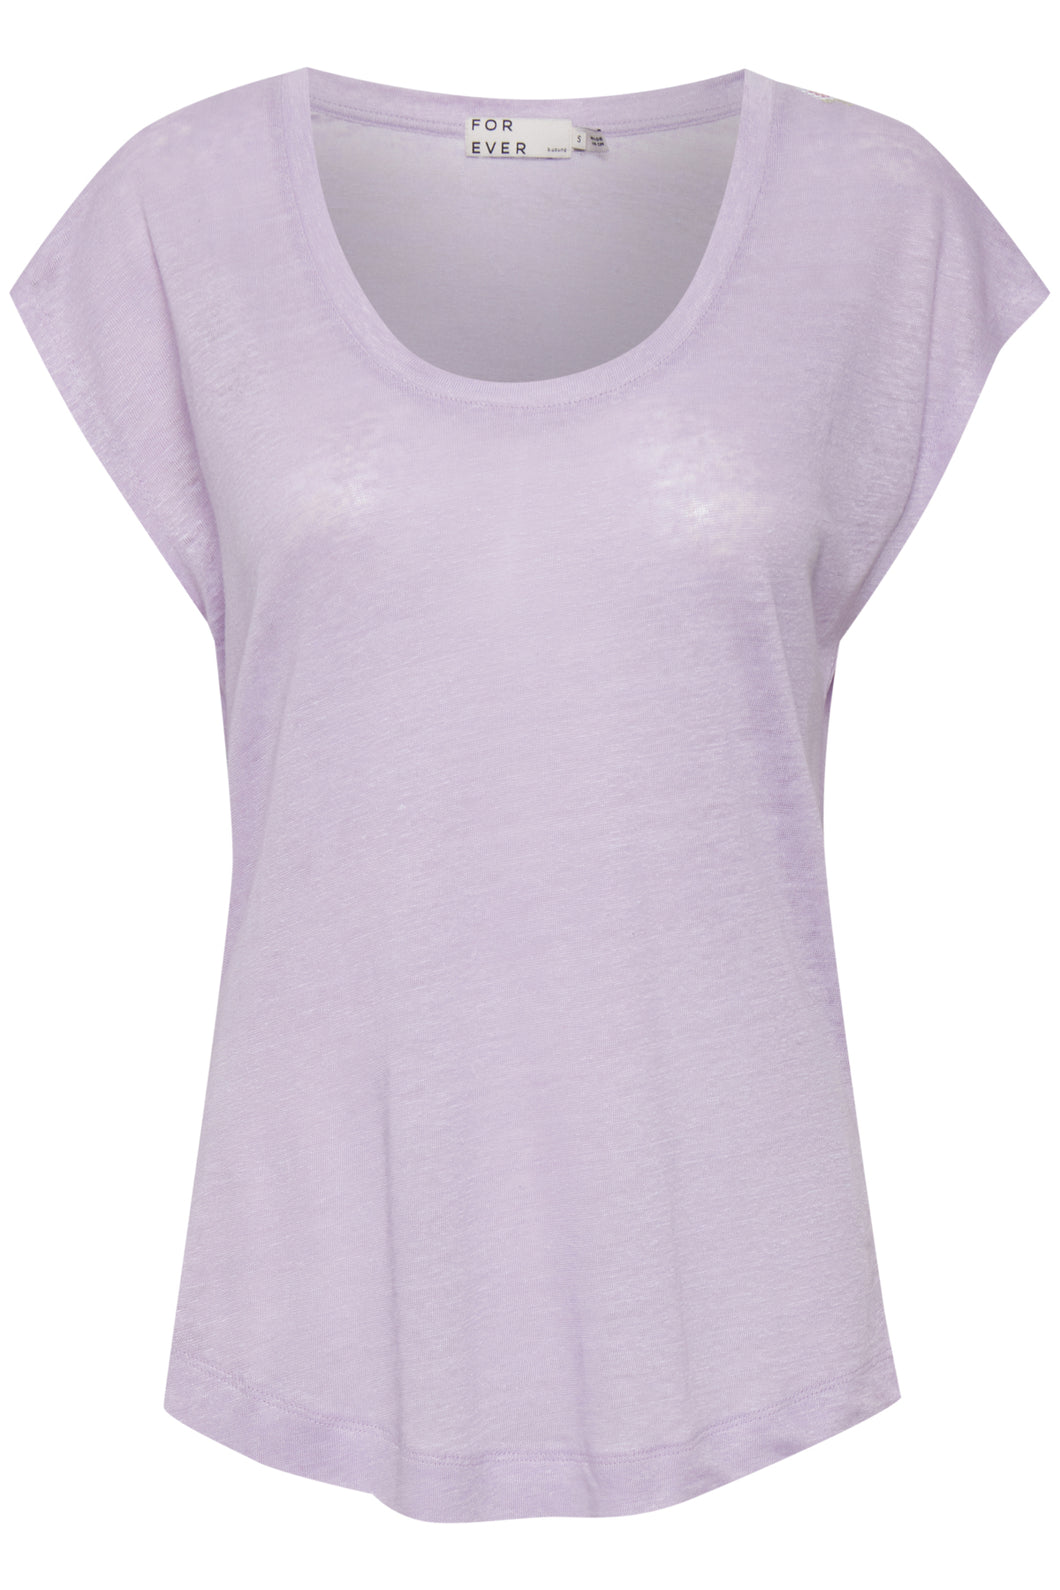 B Young Rafino T-Shirt - Pastel Lilac